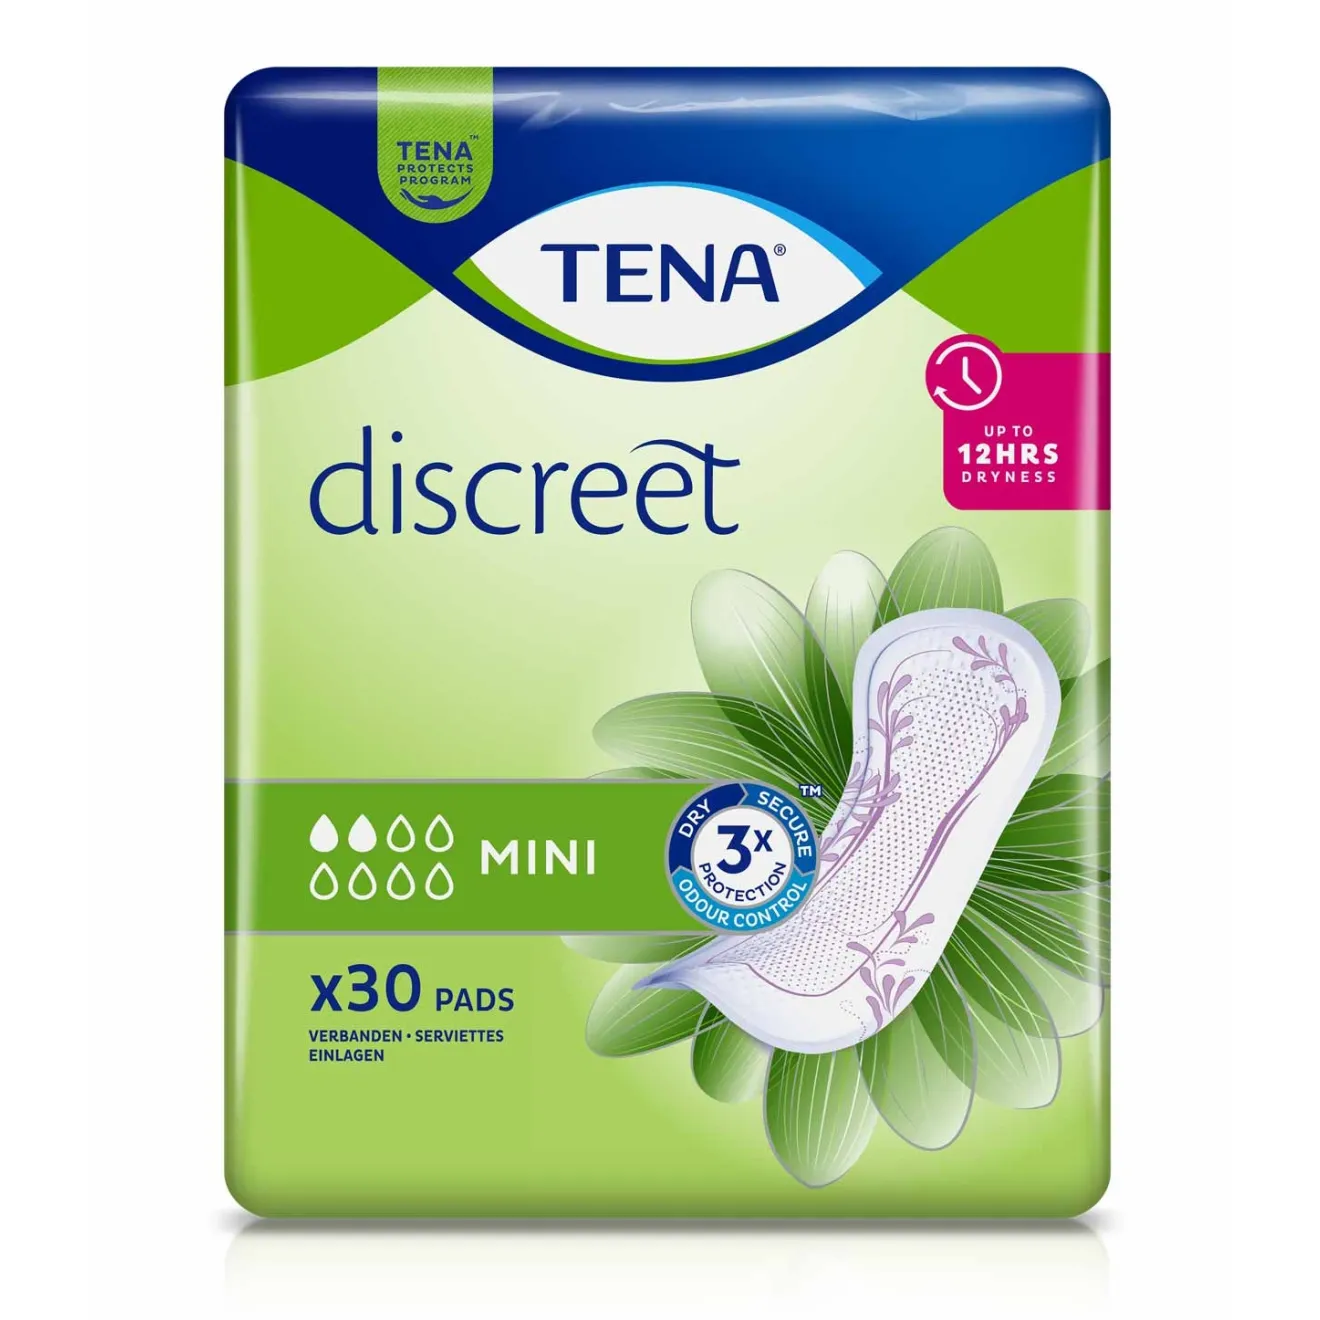 TENA Discreet Inkontinenz Einlagen mini 6x30 ST